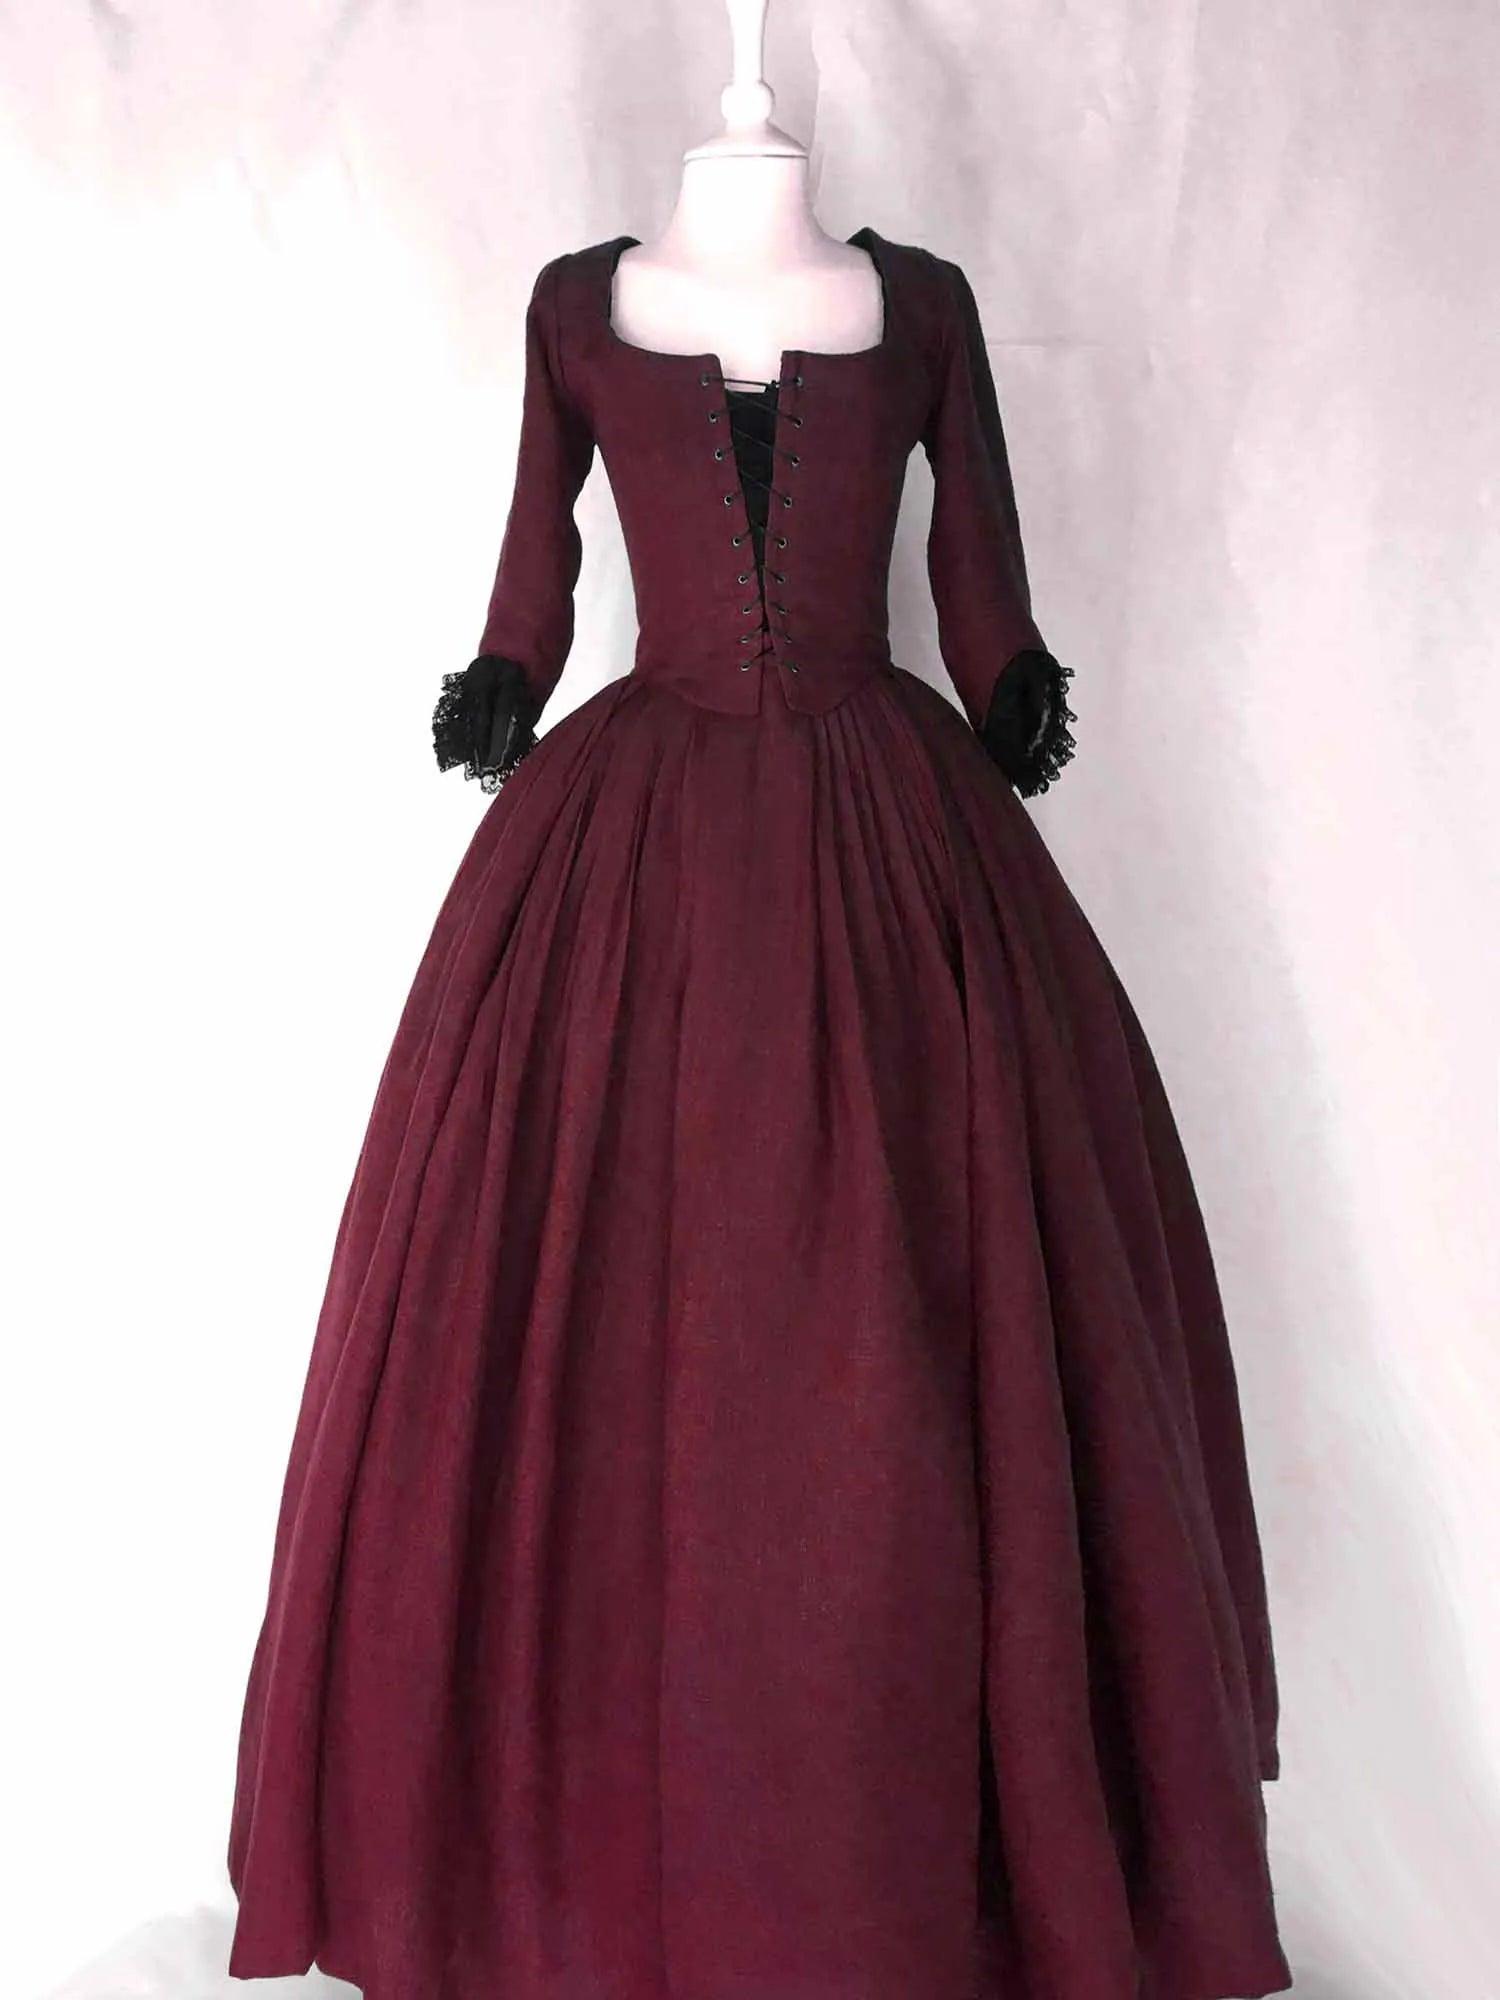 LOUISE, 18th-Century Dress in Burgundy Linen - Atelier Serraspina